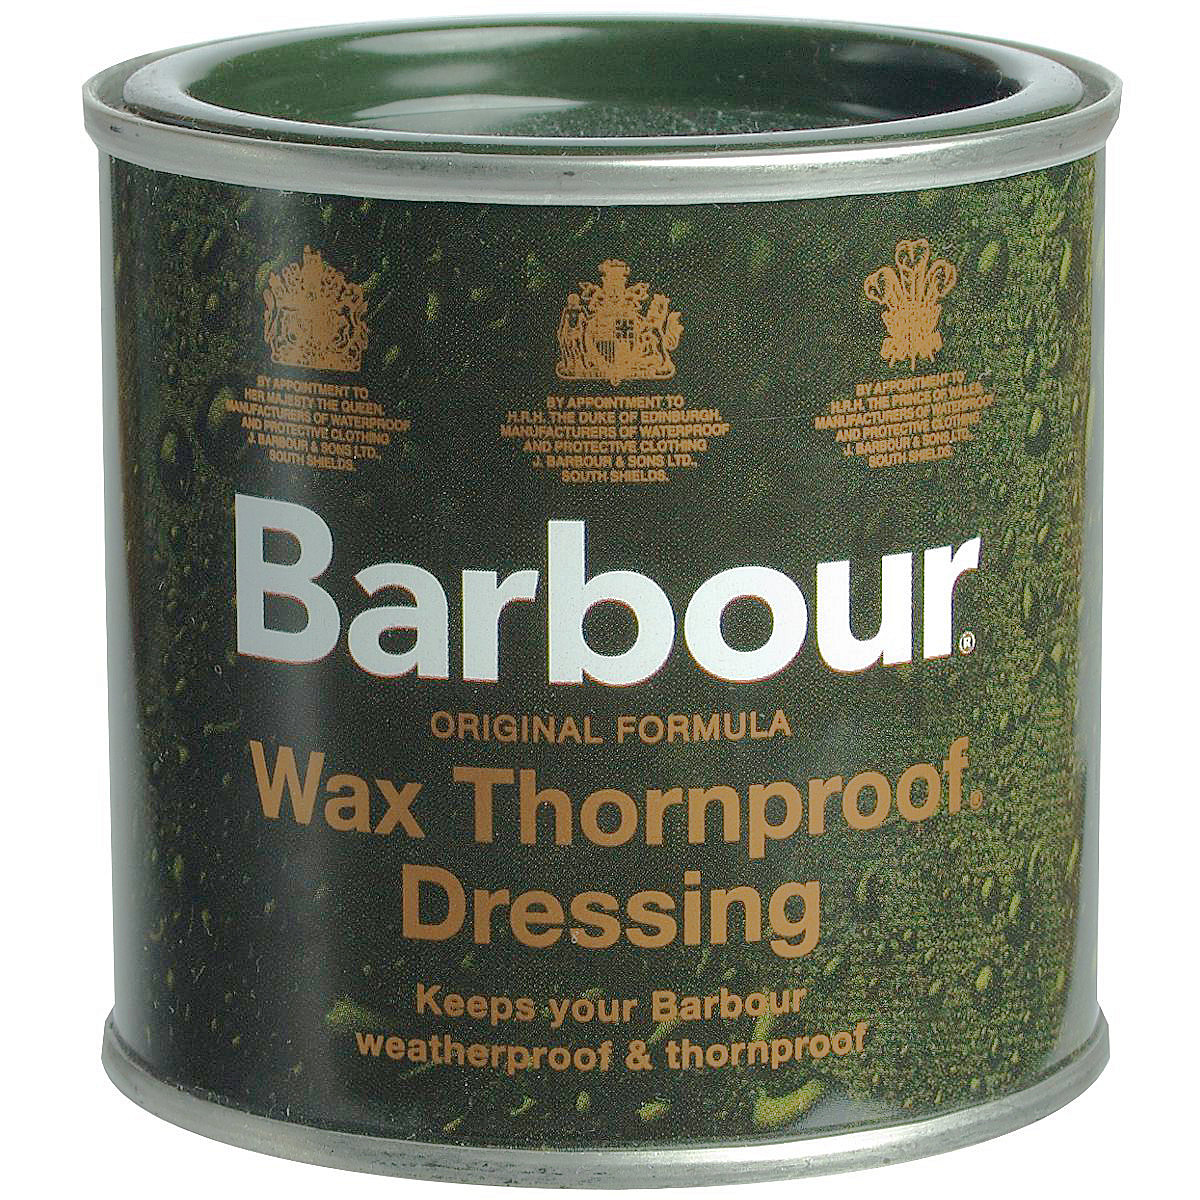 Barbour Thornproof Dressing - Wachs für Barbourjacken